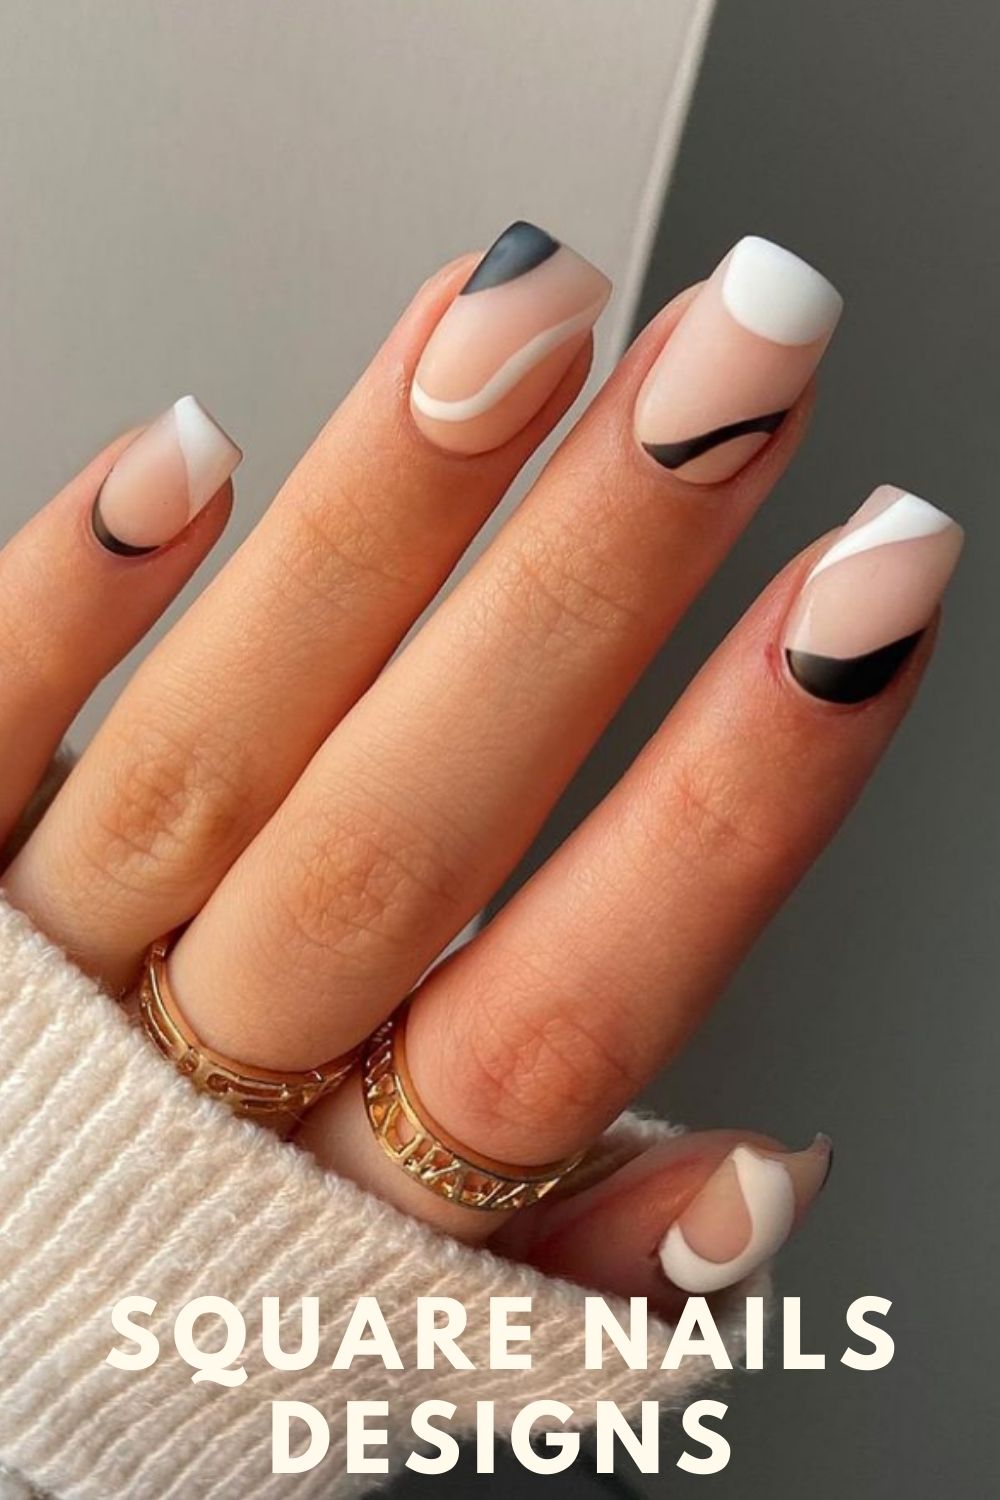 Black and white nail ideas